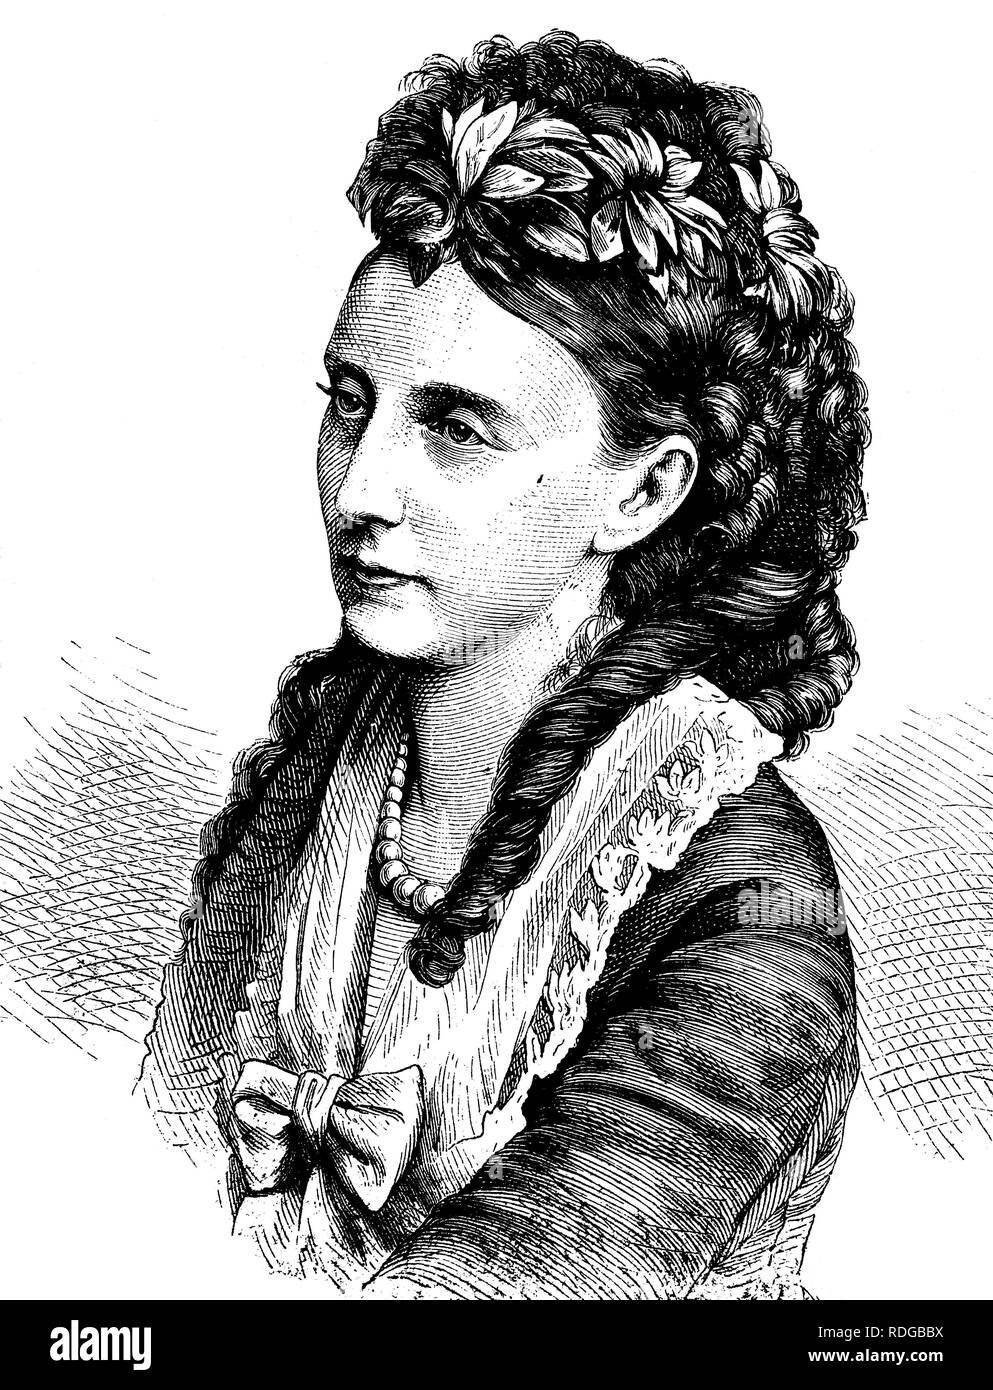 Olga Nikolaevna Romanova, Russian Grand Duches, wife of Karl I and Queen of Wuerttemberg, 1822 - 1892, historical illustration Stock Photo